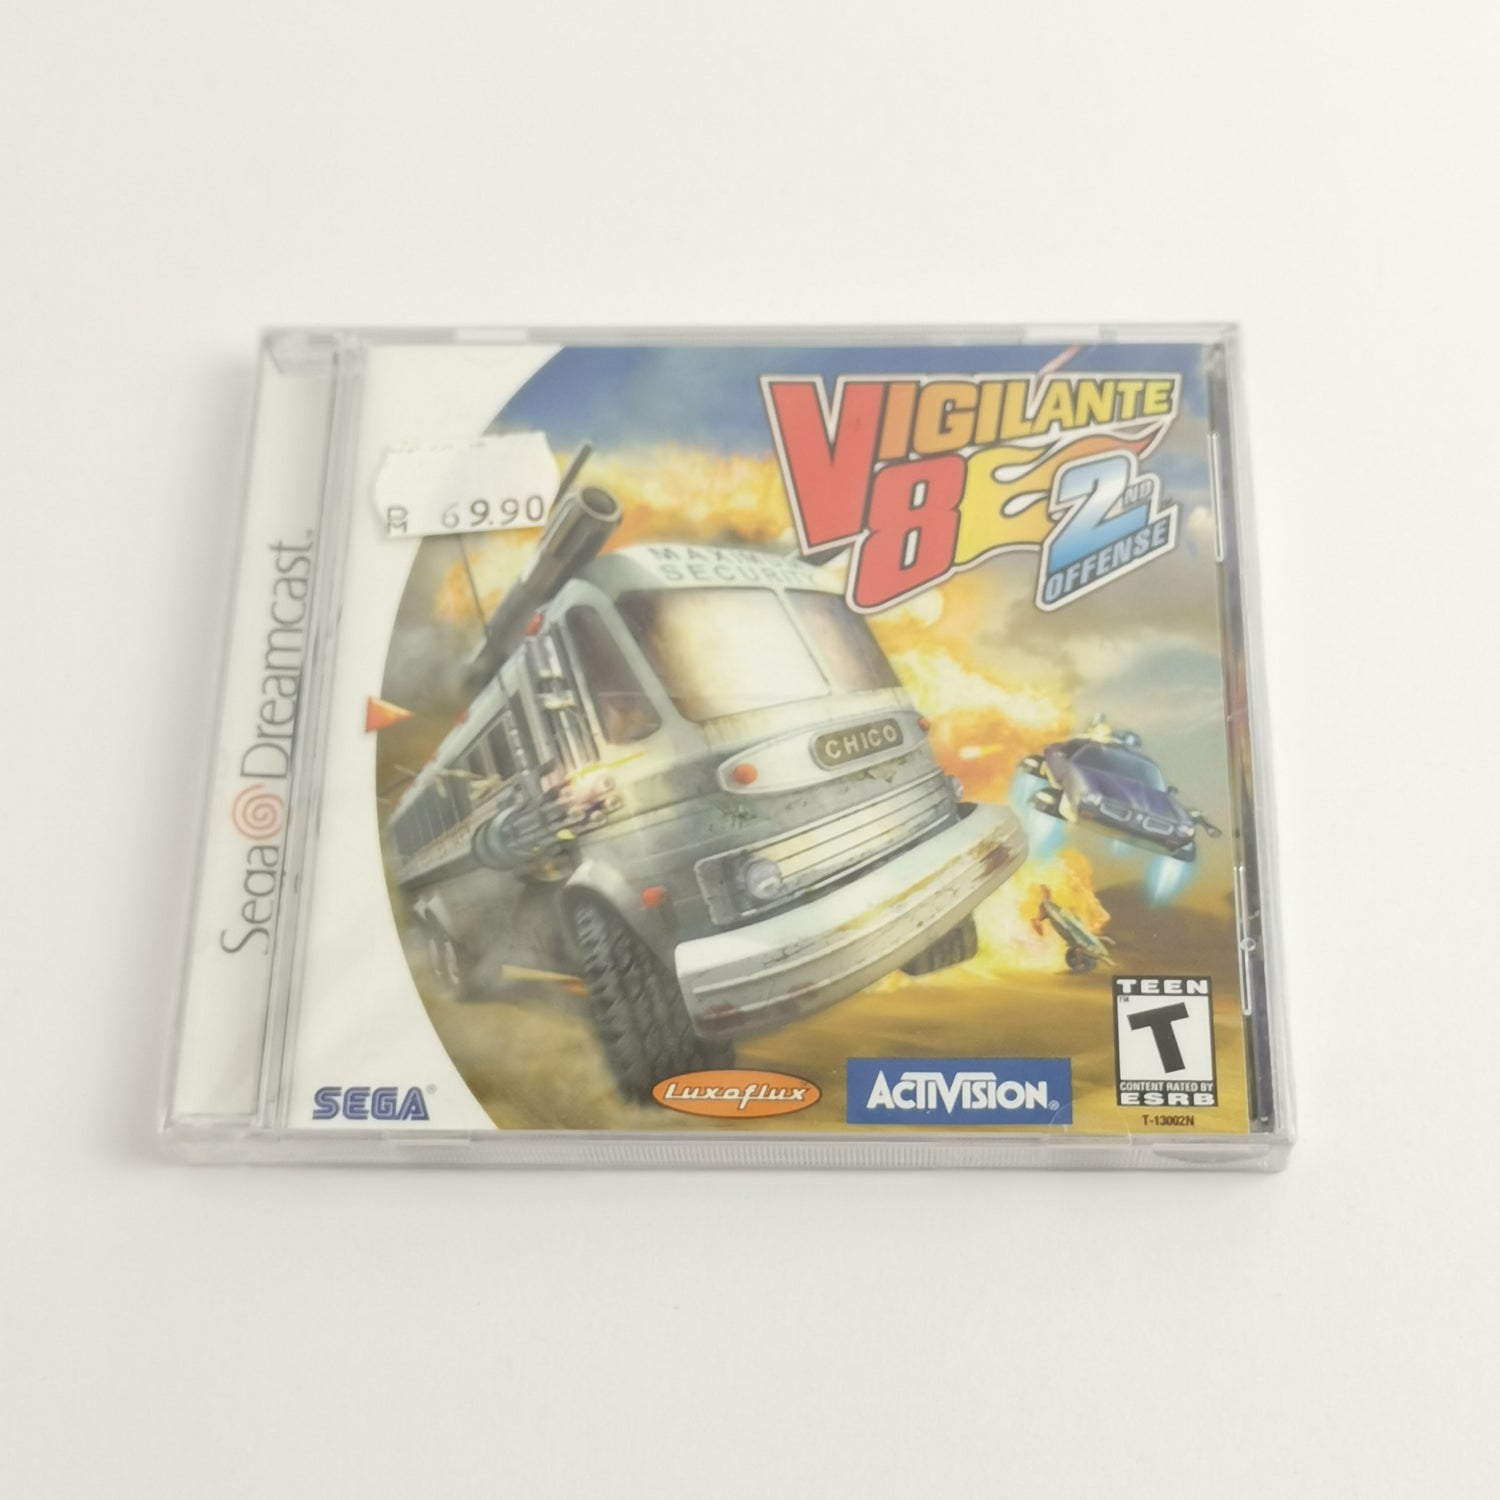 American Sega Dreamcast game: Vigilante 8 2nd Offense | New New Sealed